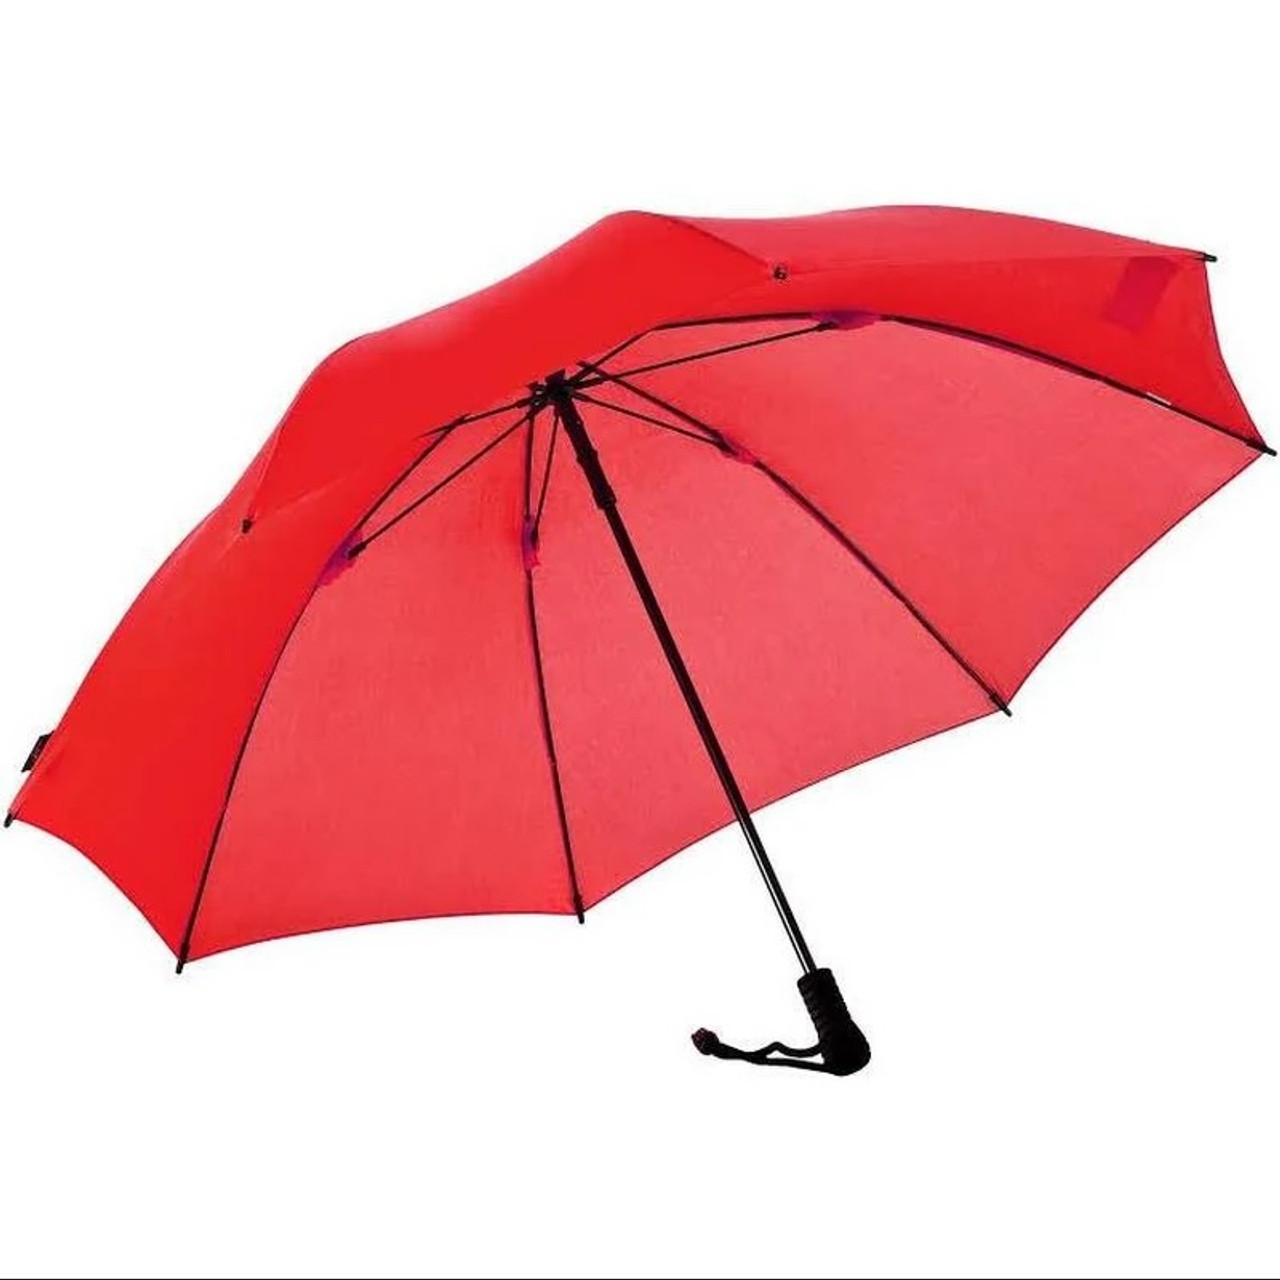 EuroSCHIRM Swing Liteflex Umbrella Red Onesize